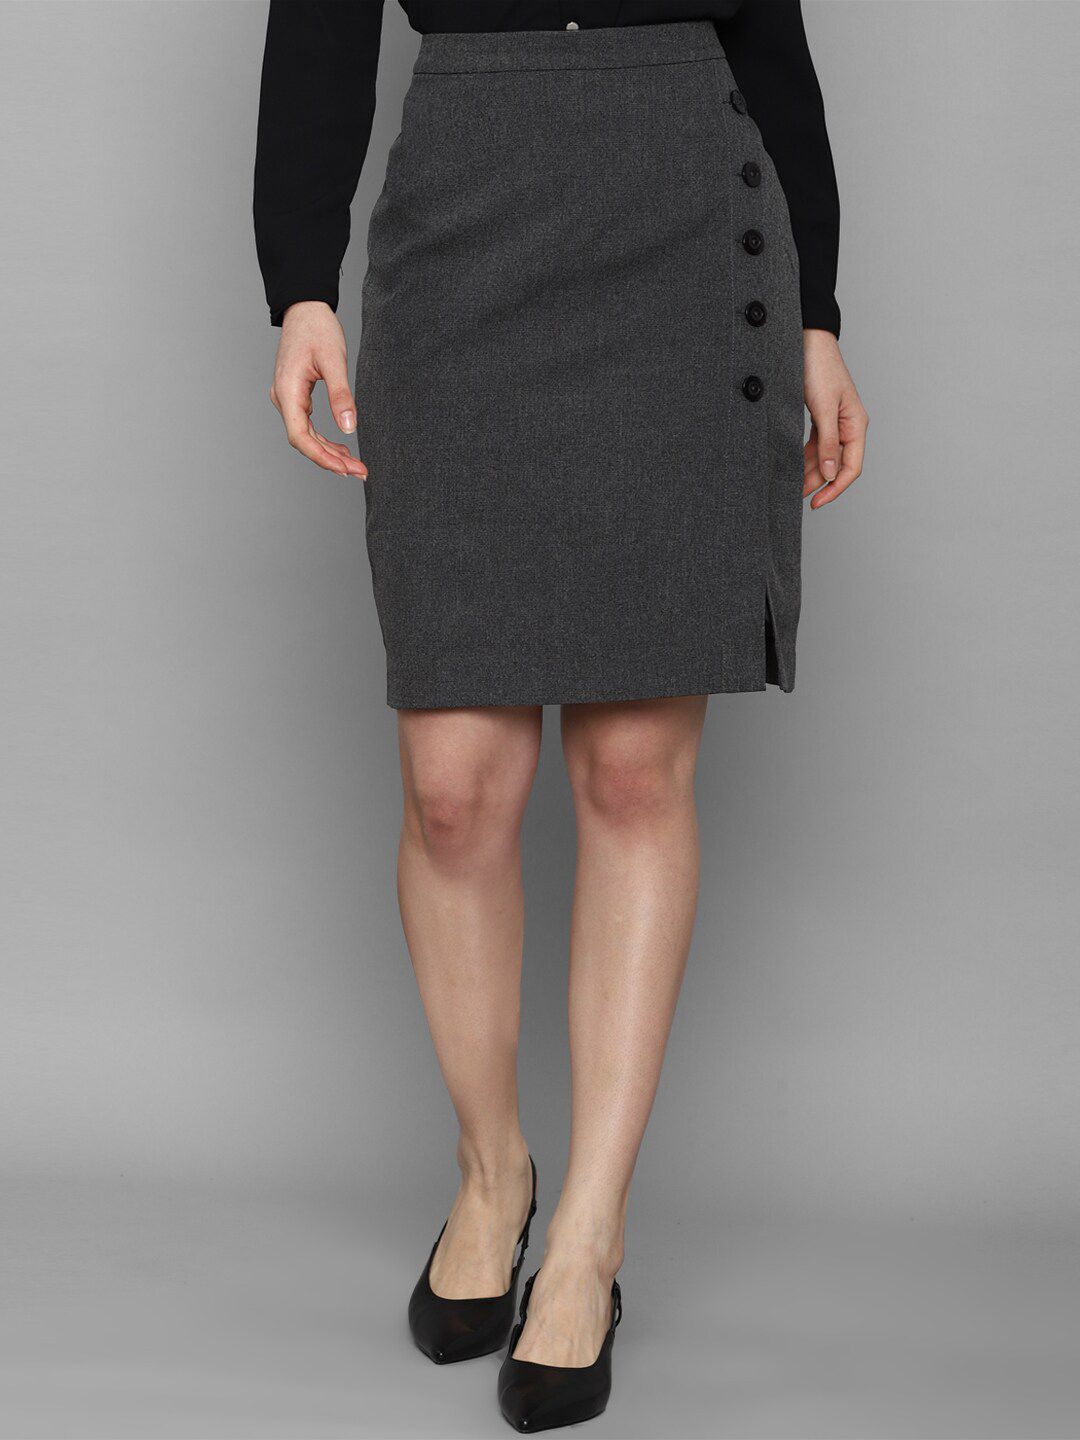 Allen Solly Women Grey Self-Design Knee-Length Pencil Skirt Price in India